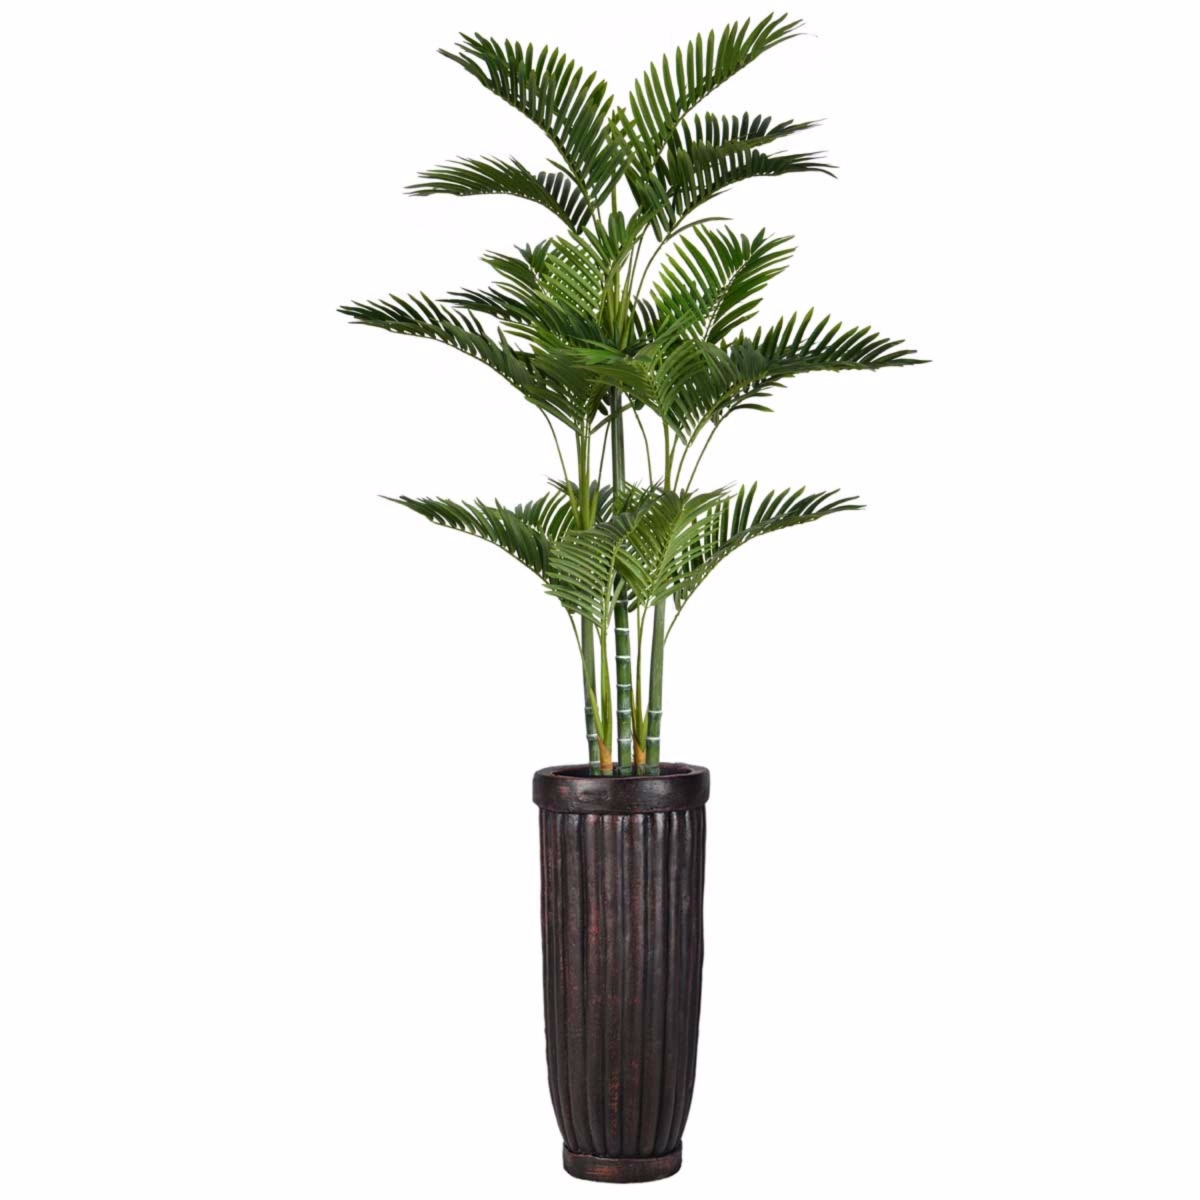 Vhx132214 81 In. Tall Palm Tree With Burlap Kit & Fiberstone Planter